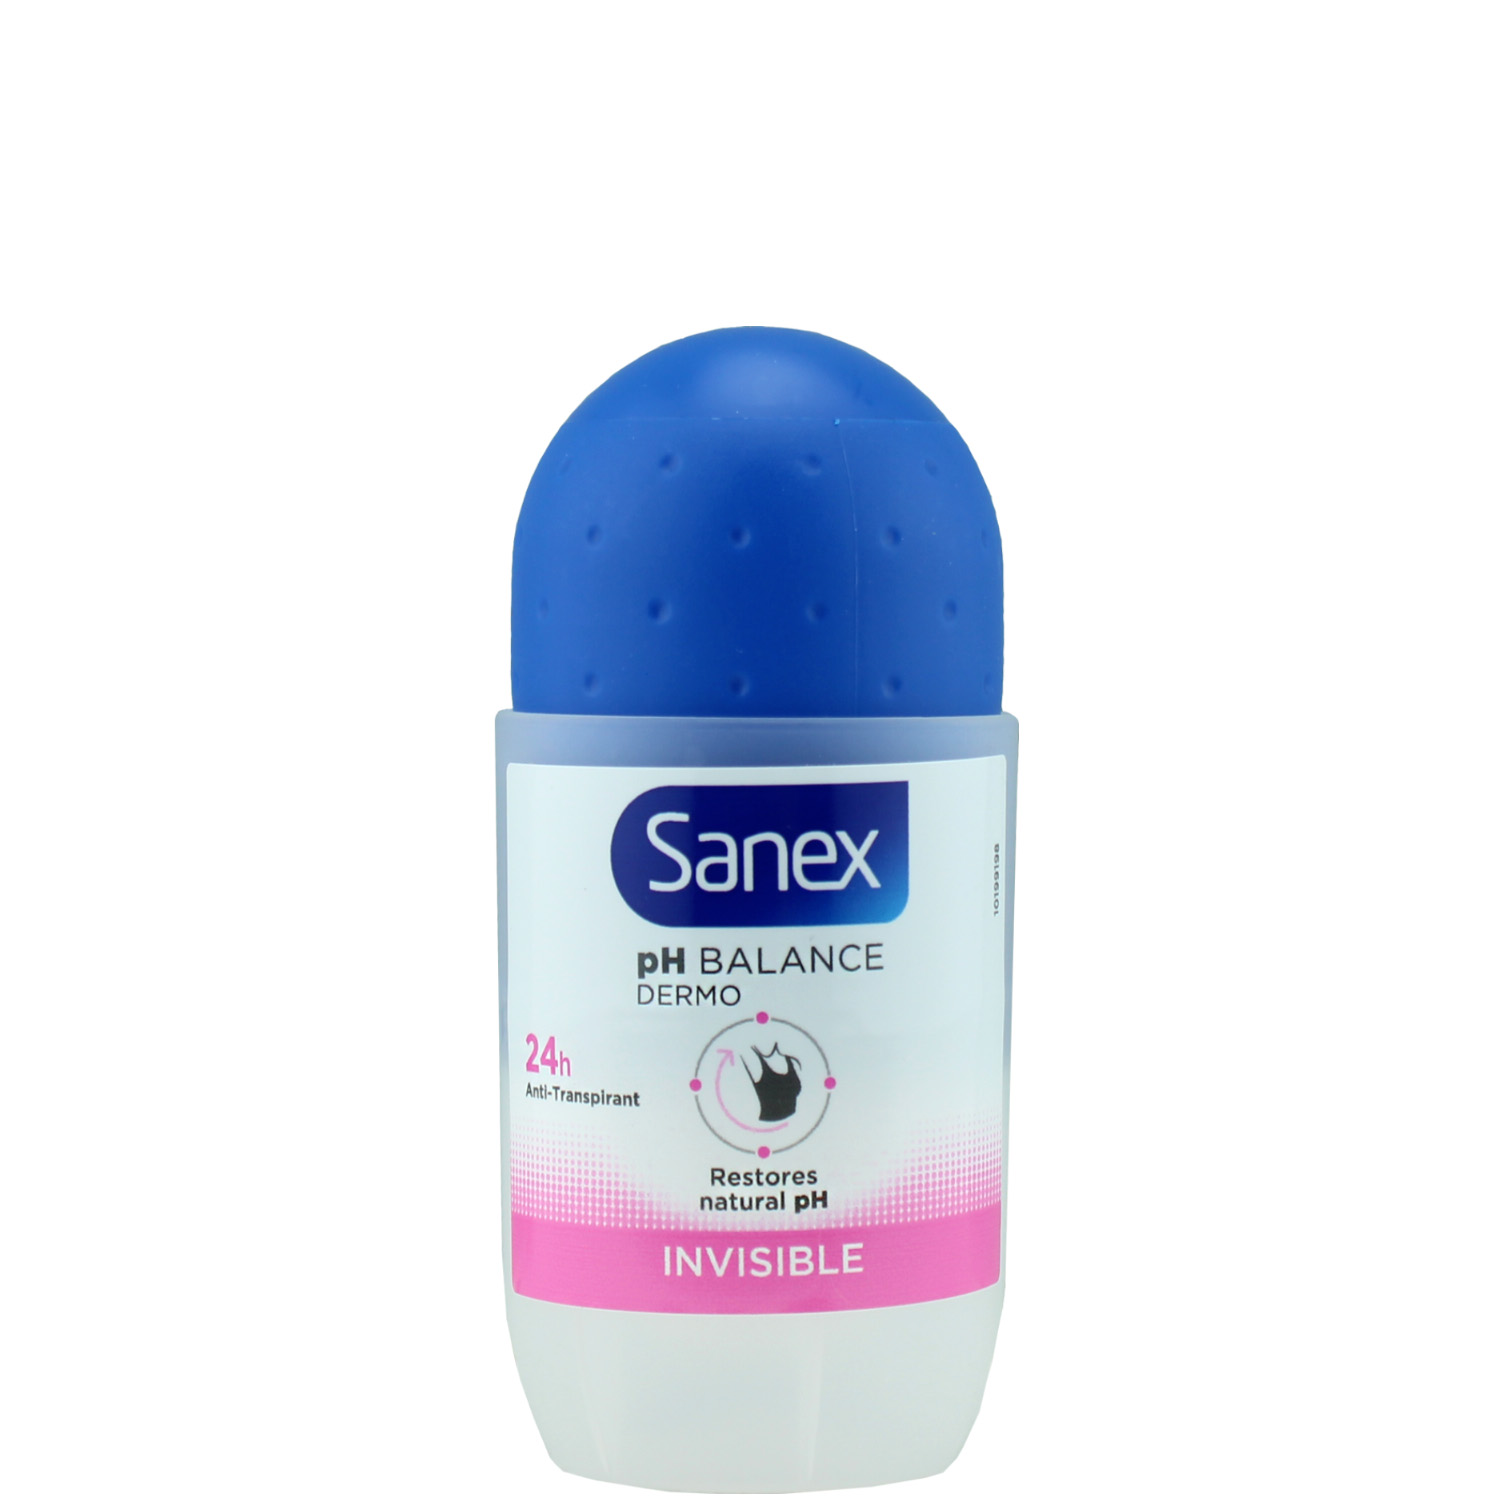 Sanex pH Balance Dermo Invisible 24h Antitranspirant Deodorant Roll-On 50ml